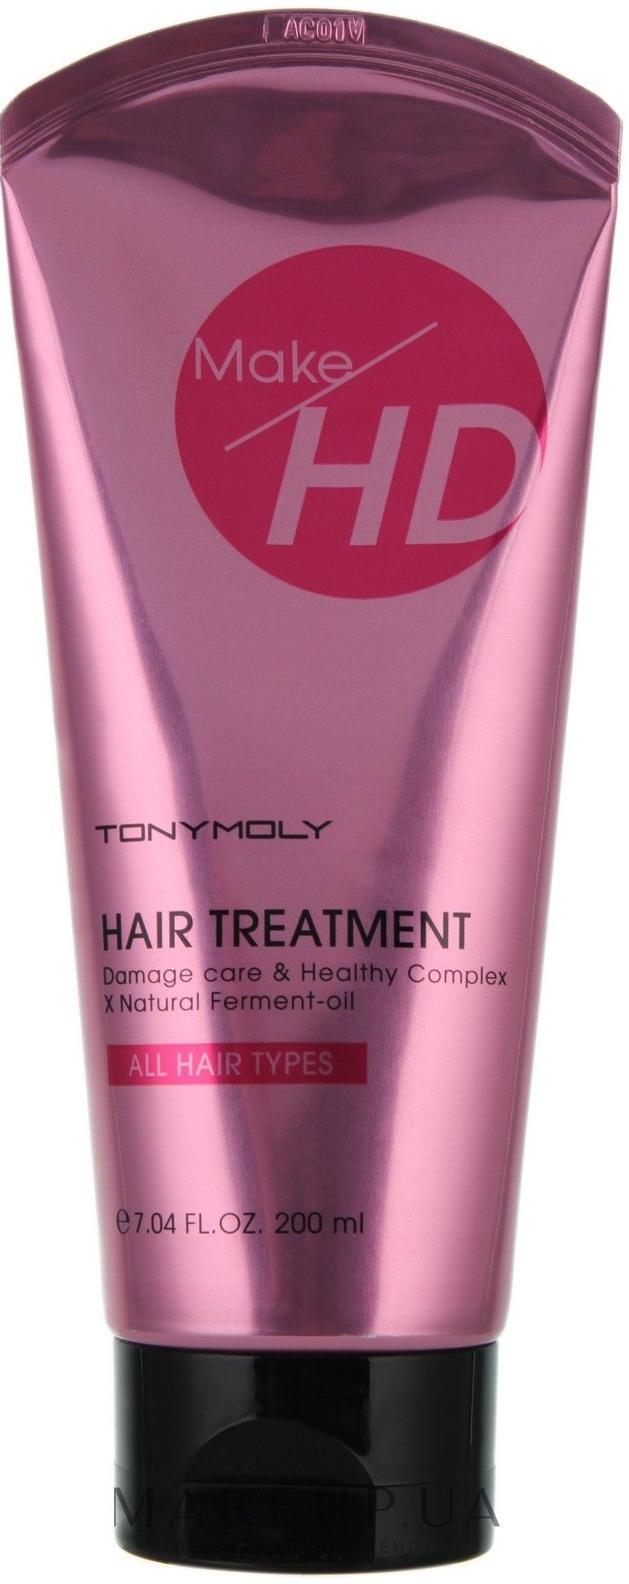 Маска для волос Make HD Hair Treatment Tony Moly